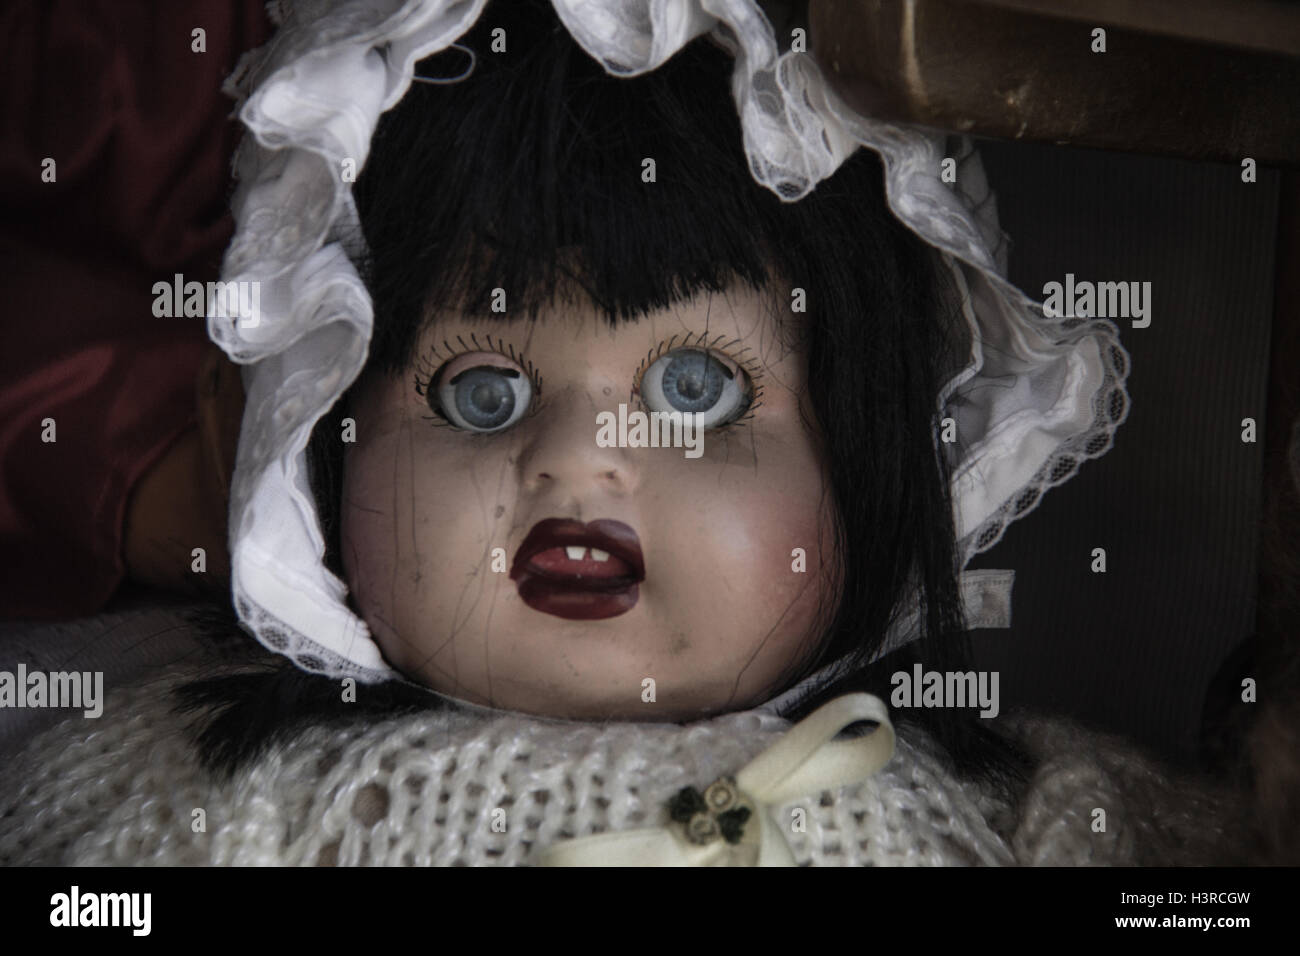 Creepy dolls Stock Photo